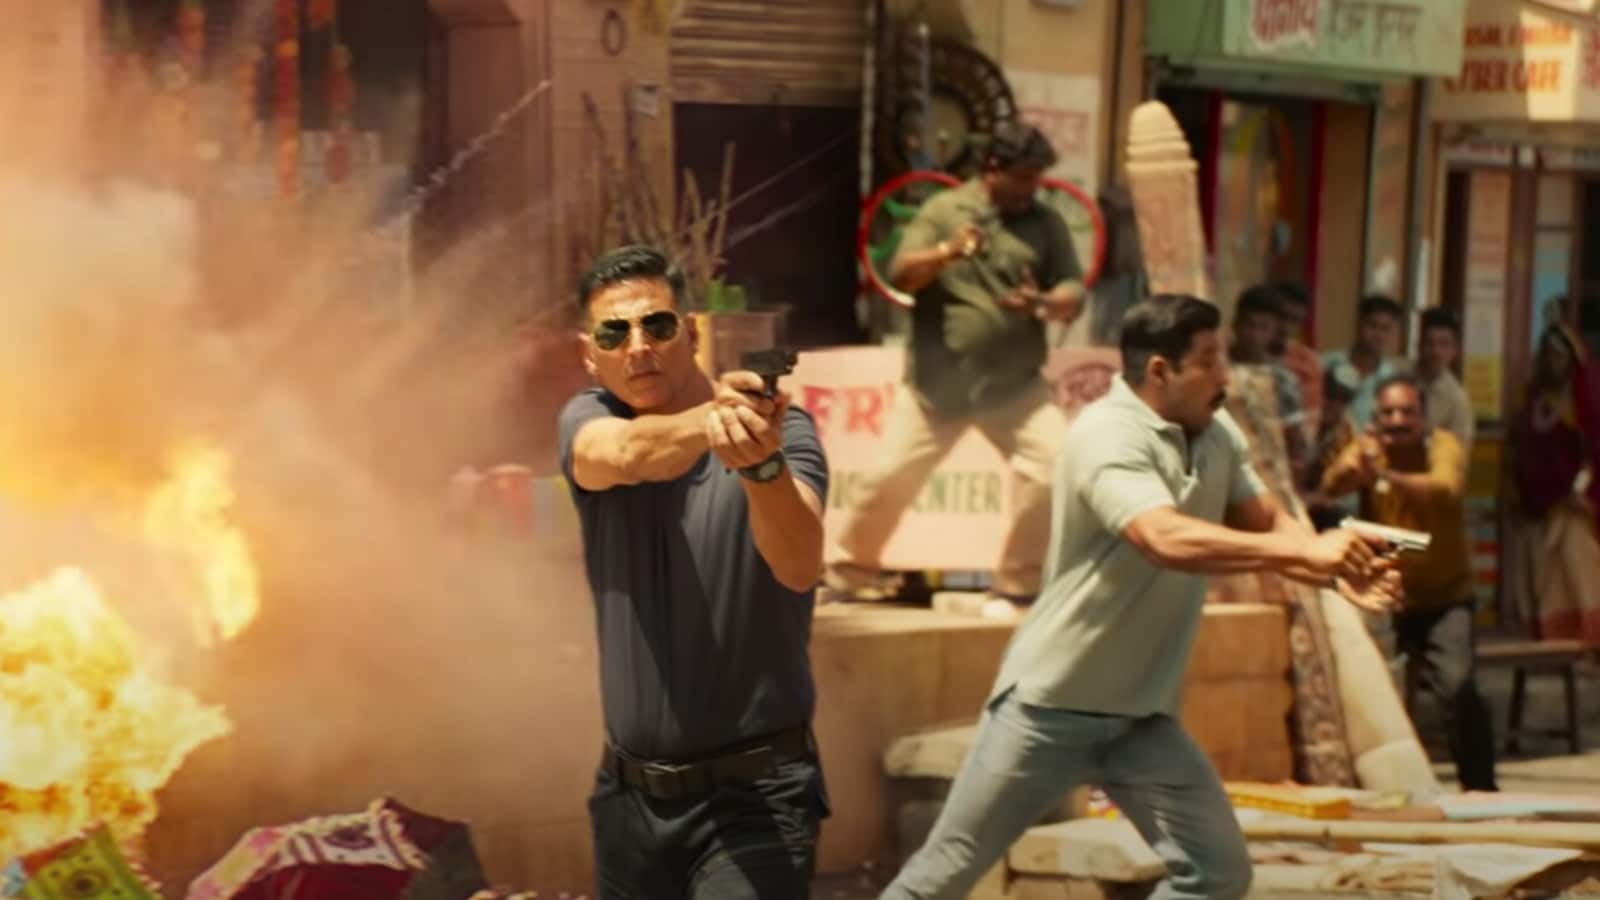 Sooryavanshi movie review: Akshay Kumar’s high-octane action film is your Diwali gift this year | Bollywood